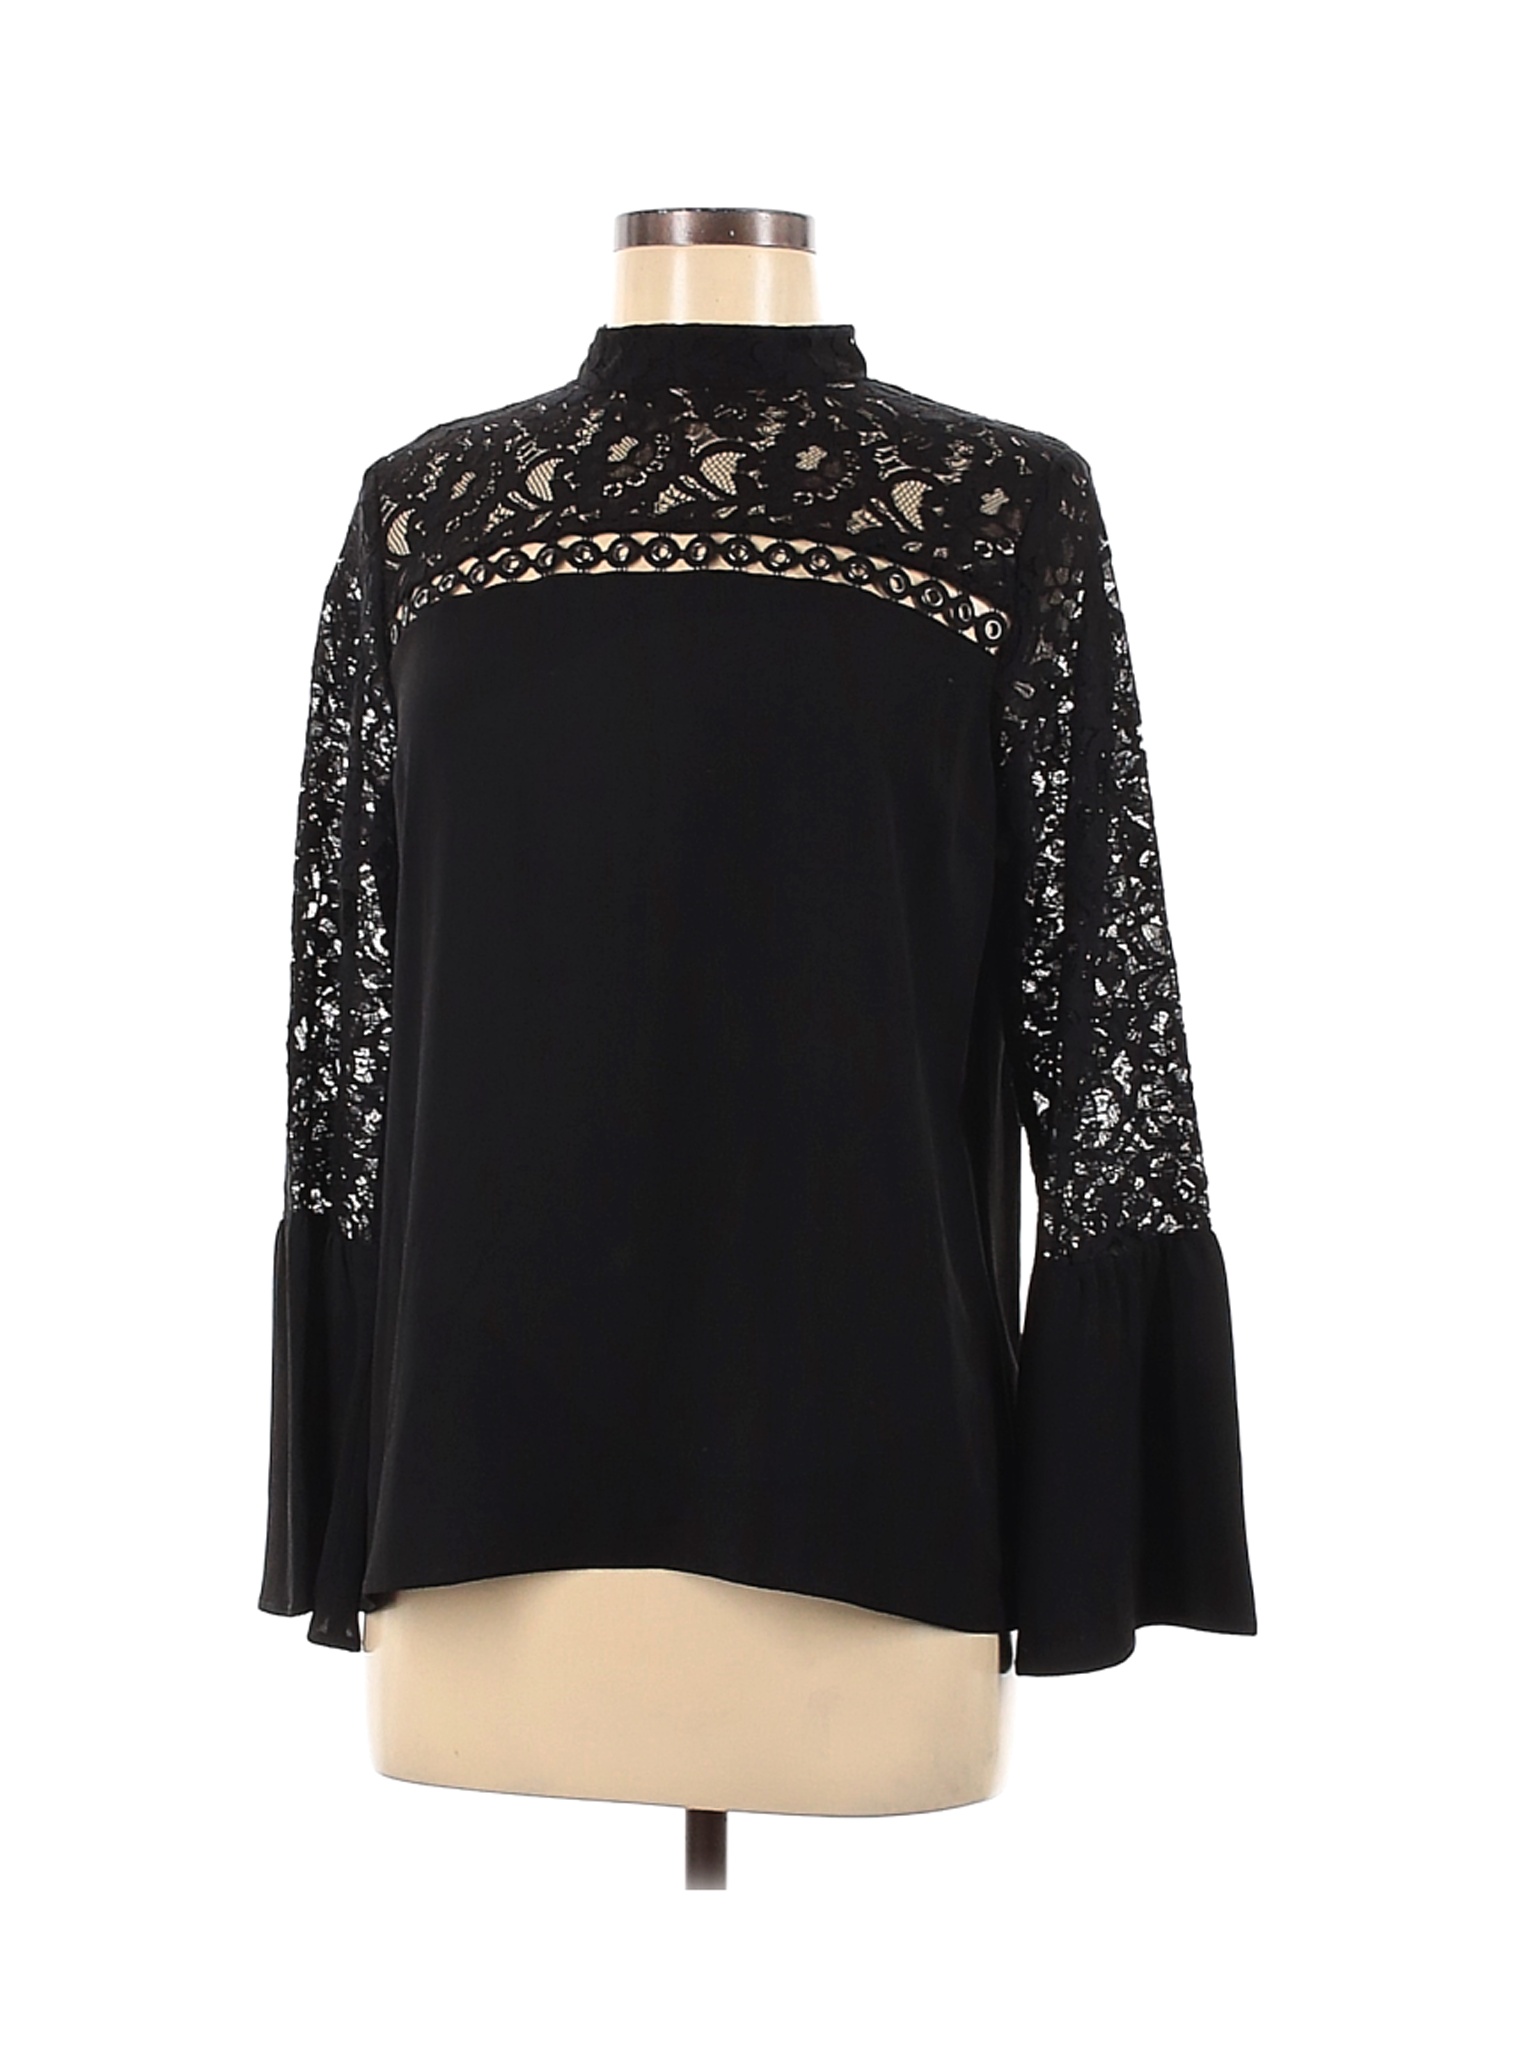 NWT Primark Women Black Long Sleeve Blouse 6 | eBay